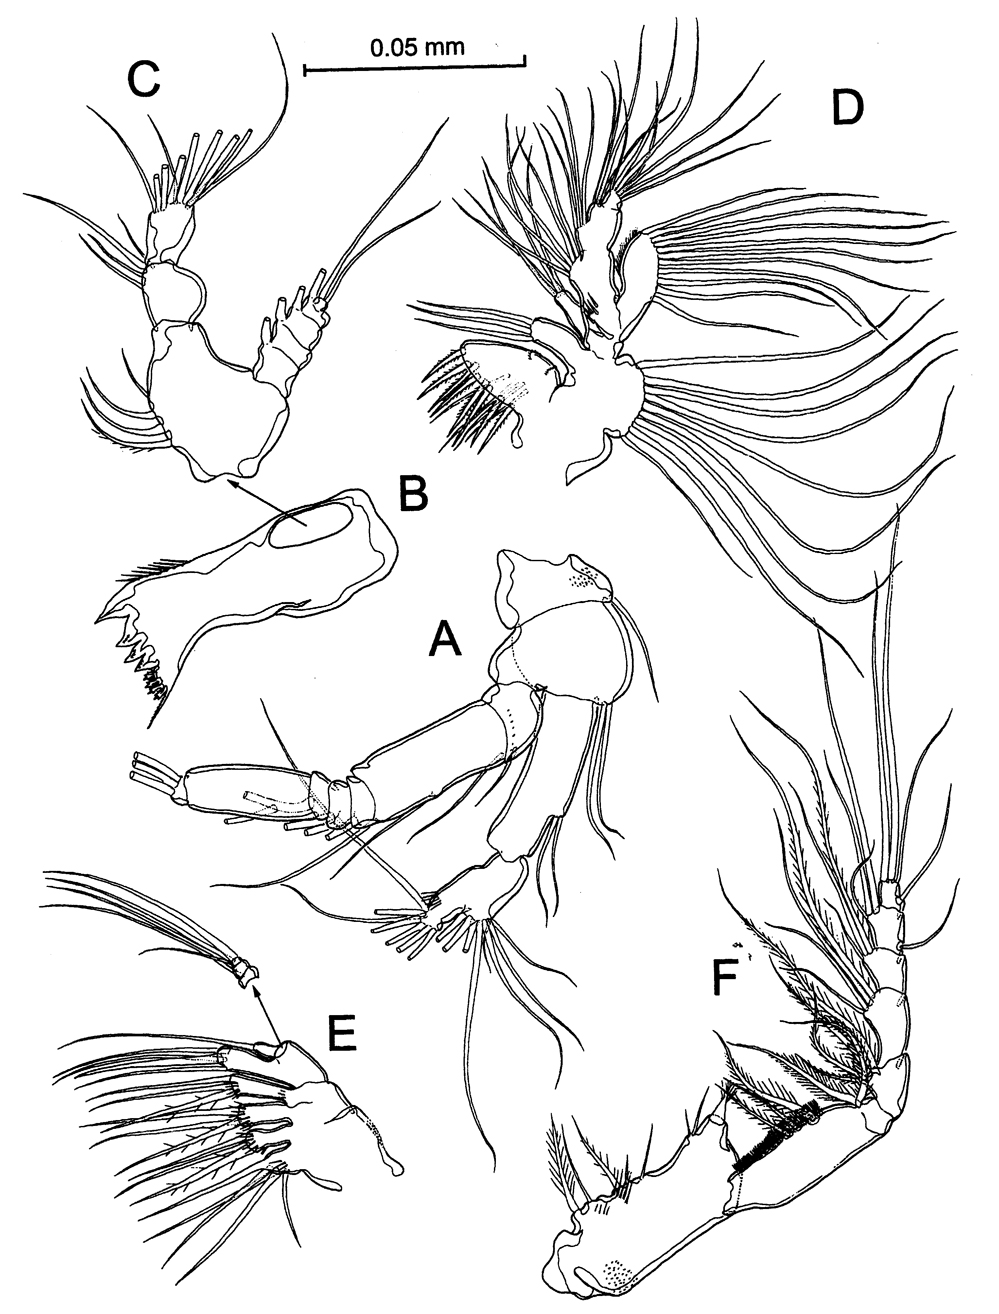 Species Stephos vivesi - Plate 8 of morphological figures